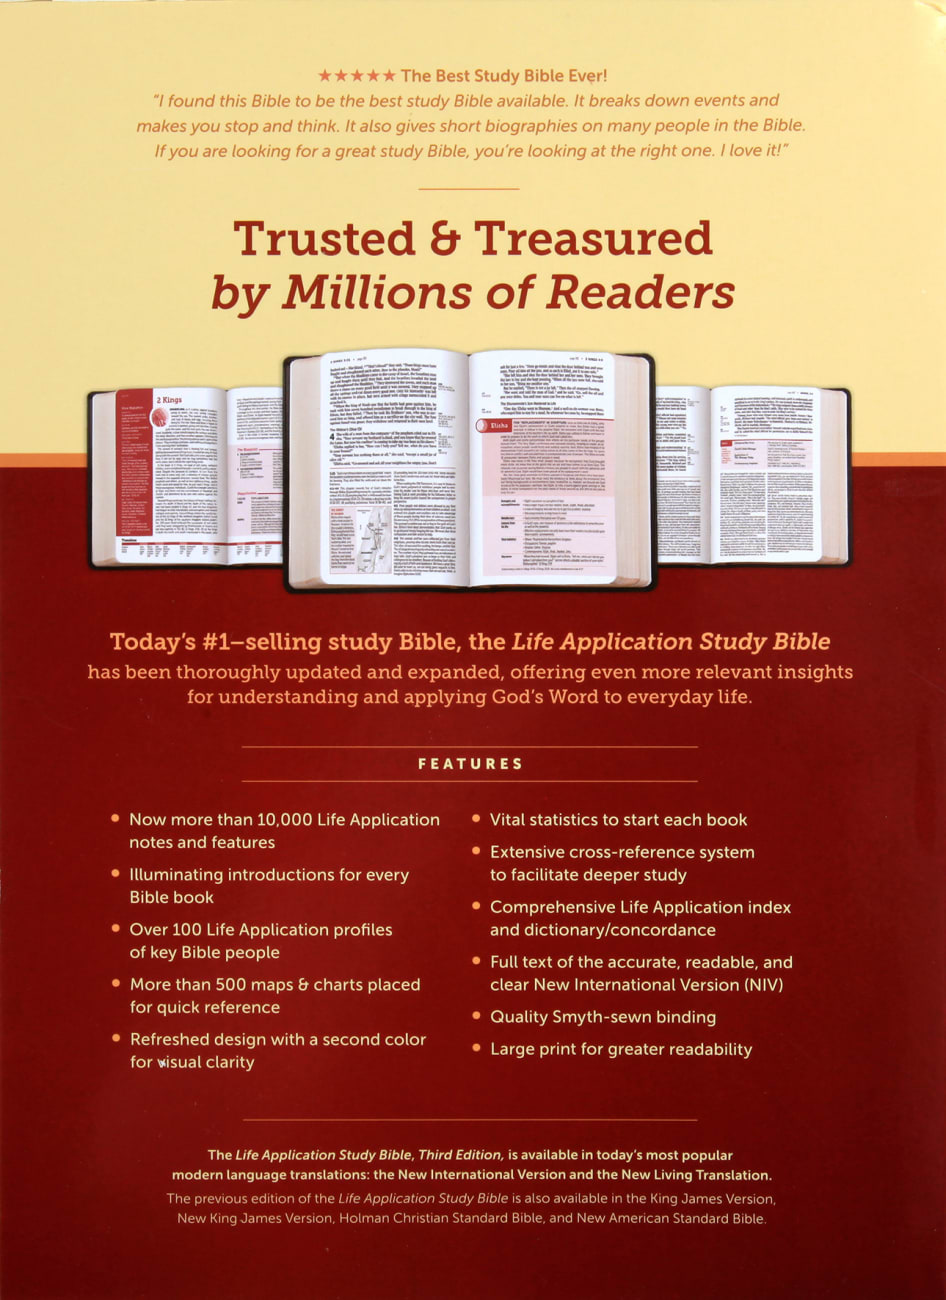 NIV Life Application Study Bible 3rd Edition Large Print (Red Letter Edition) Hardback